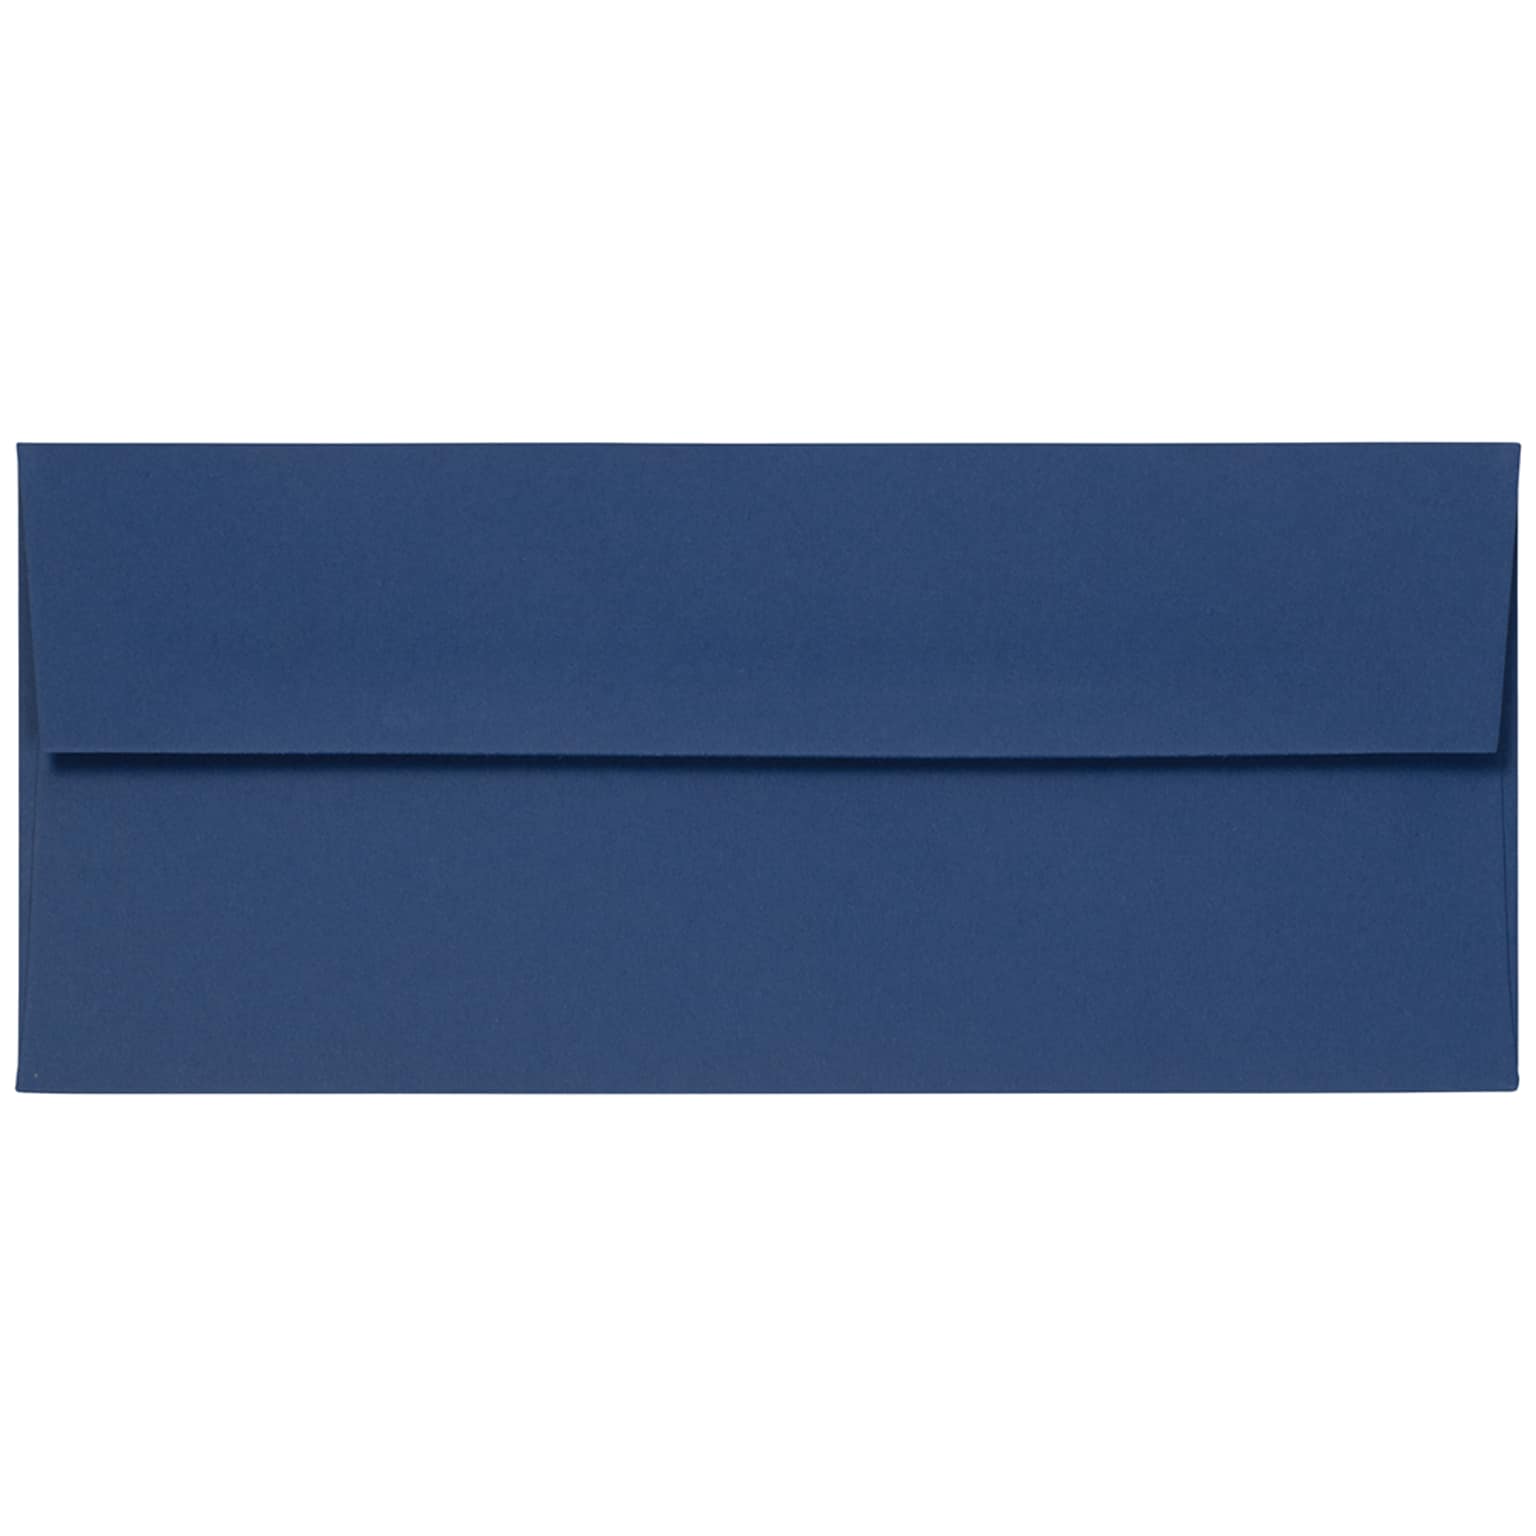 JAM Paper #10 Business Envelope, 4 1/8 x 9 1/2, Blue, 25/Pack (463916900)